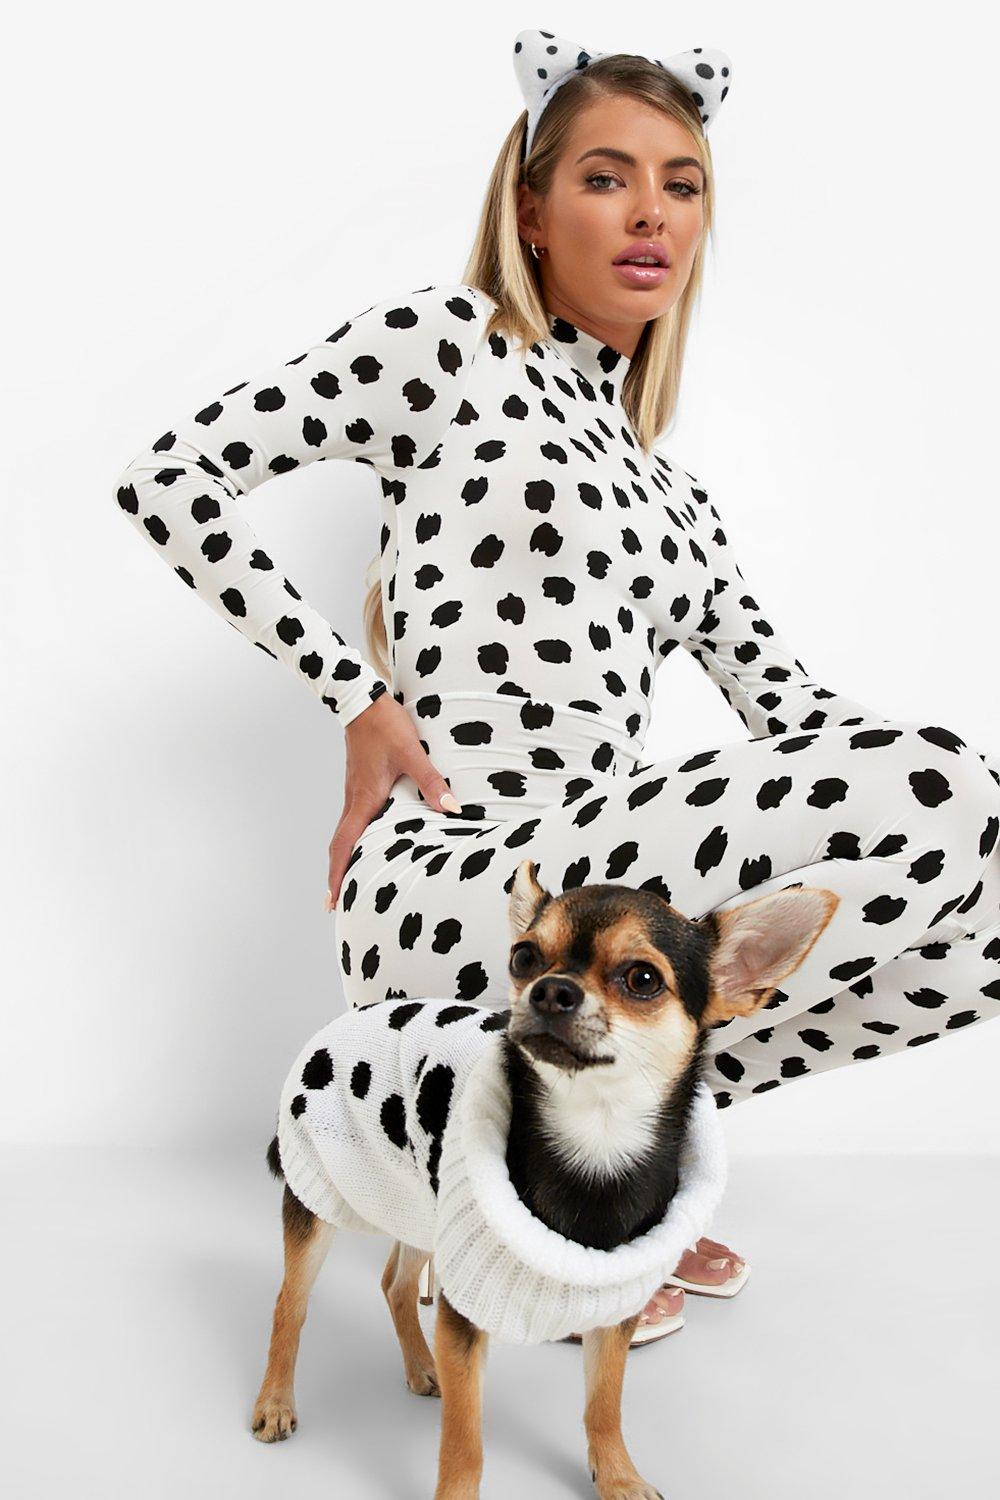 Dalmatian dog costume